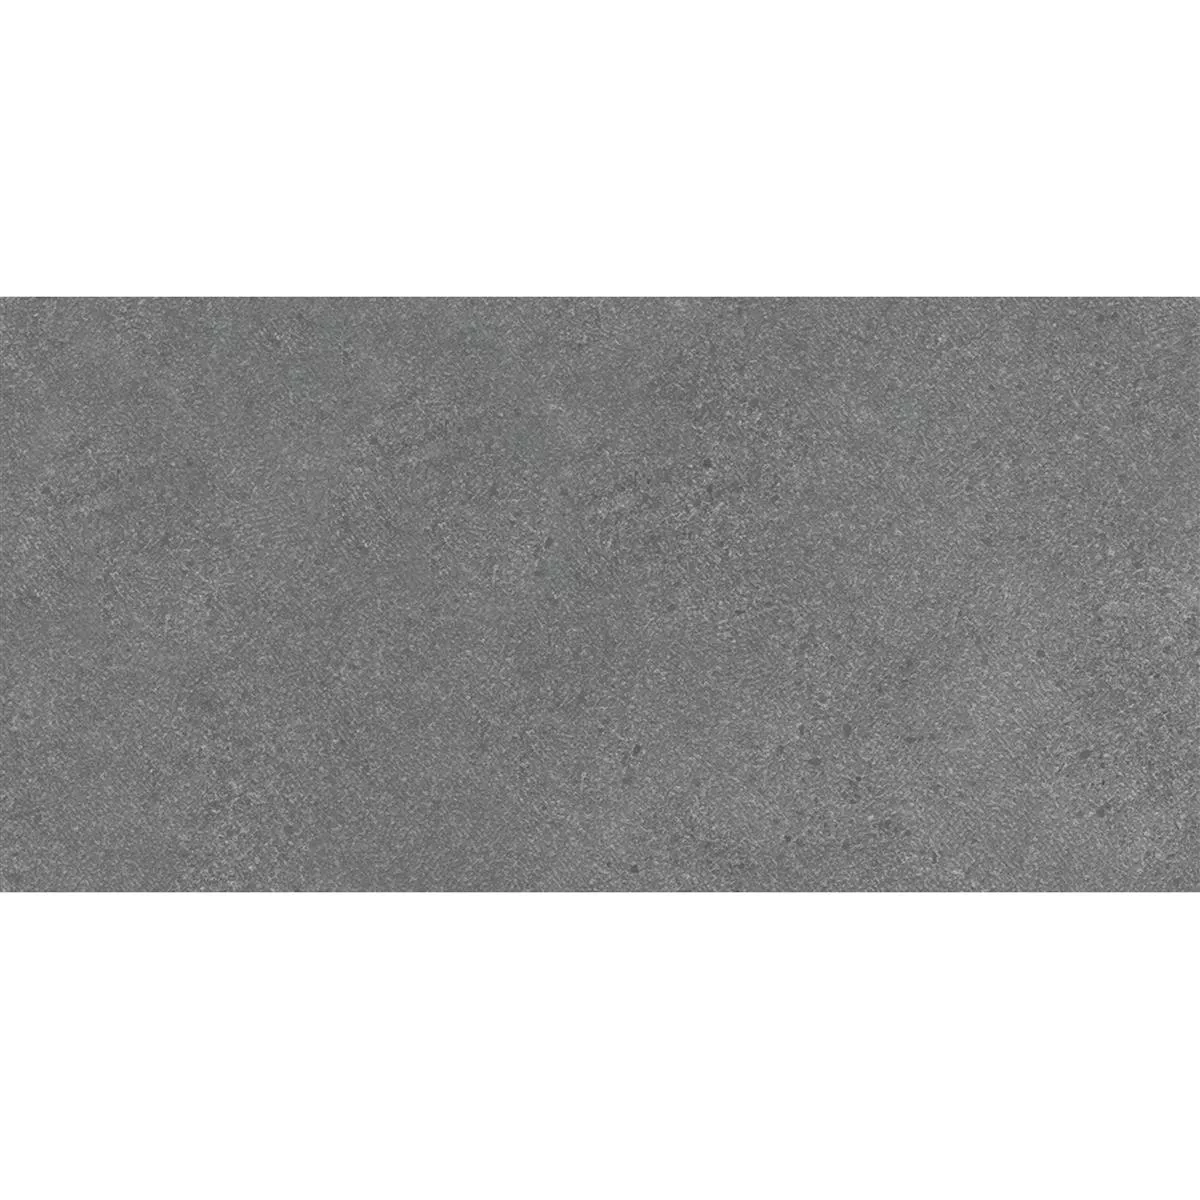 Podlahové Dlaždice Galilea Neglazovaný R10B Antracitová 30x60cm